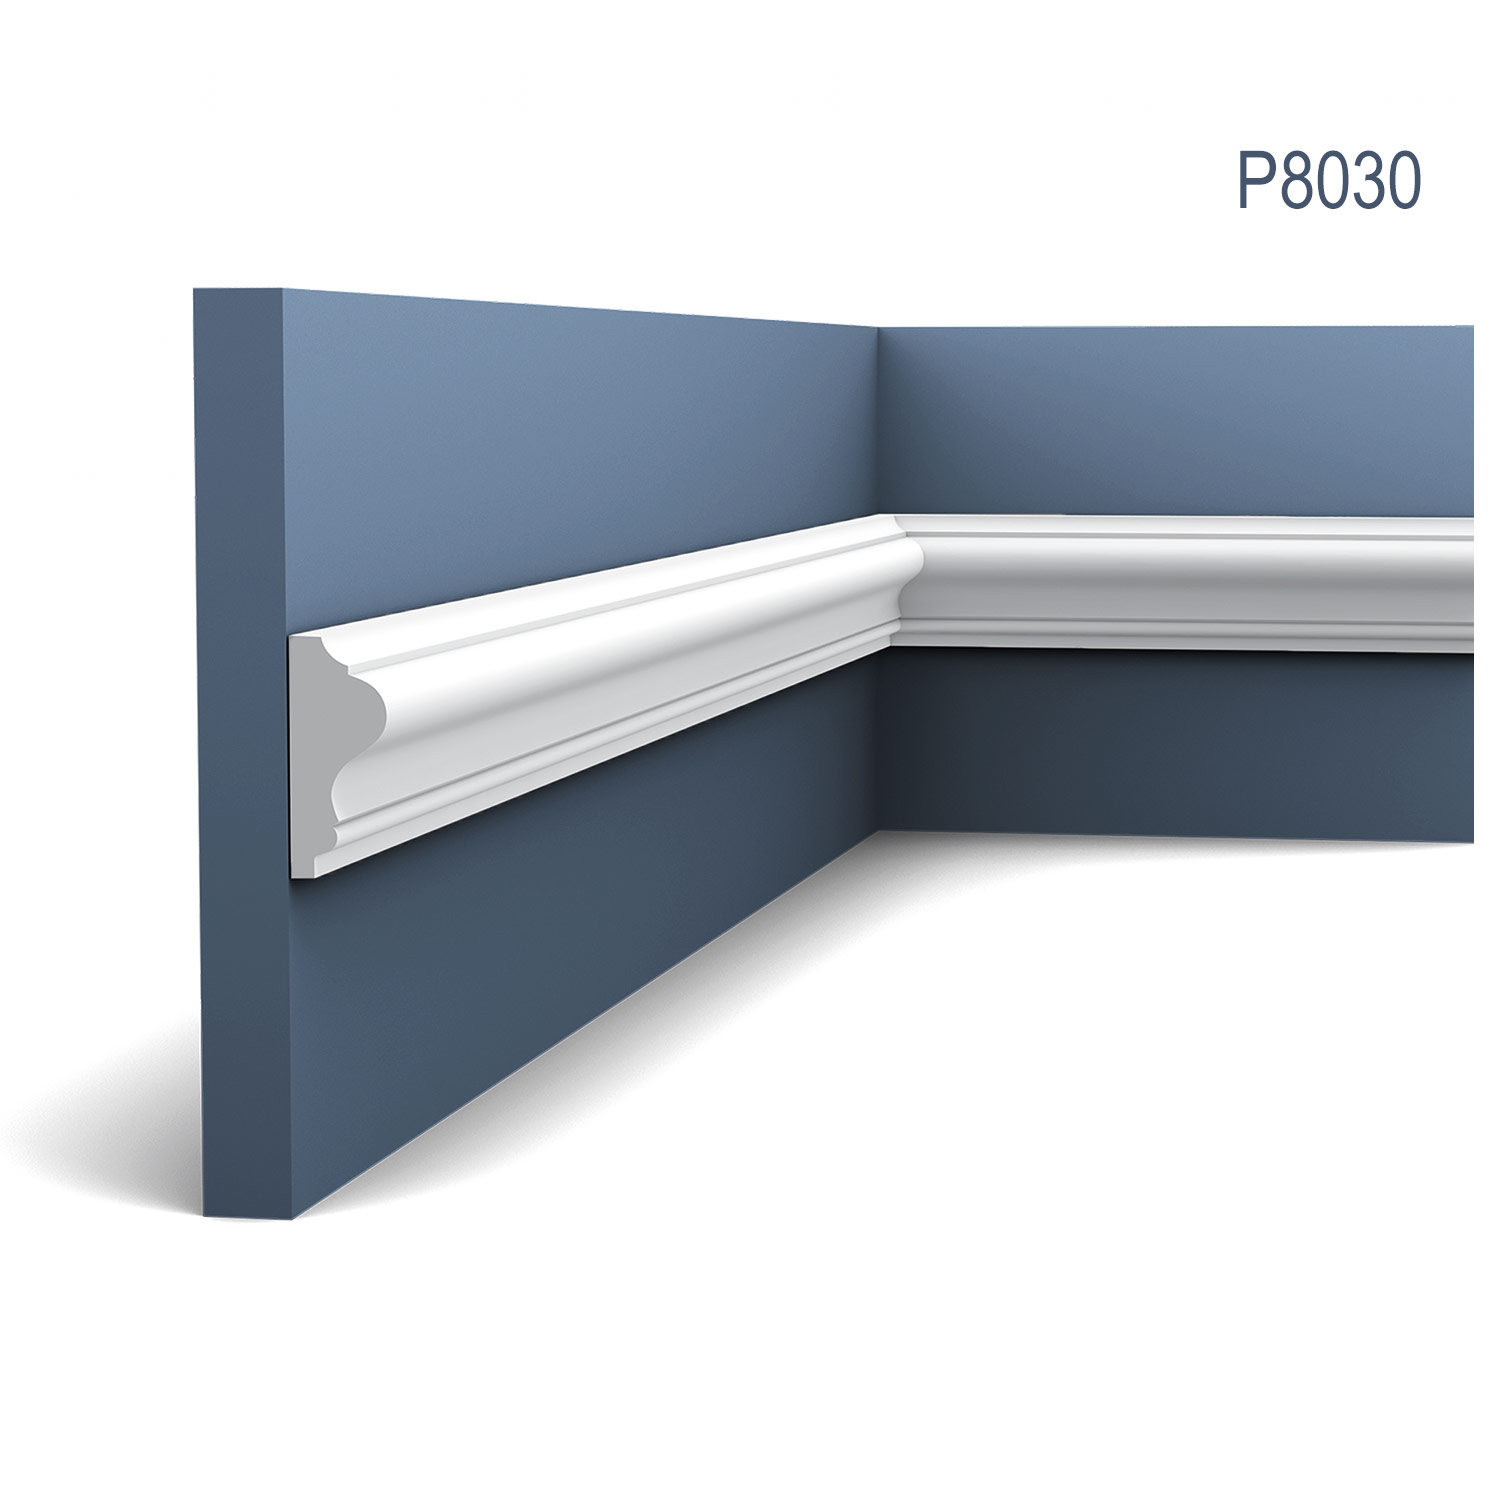 Brau intermediar P8030, profil decorativ multifunctional, pentru perete, alba, vopsibila, rigida, calitate excelenta, Belgia, din Poliuretan rigid, L 200 x H 4.1 x W 1.7 cm